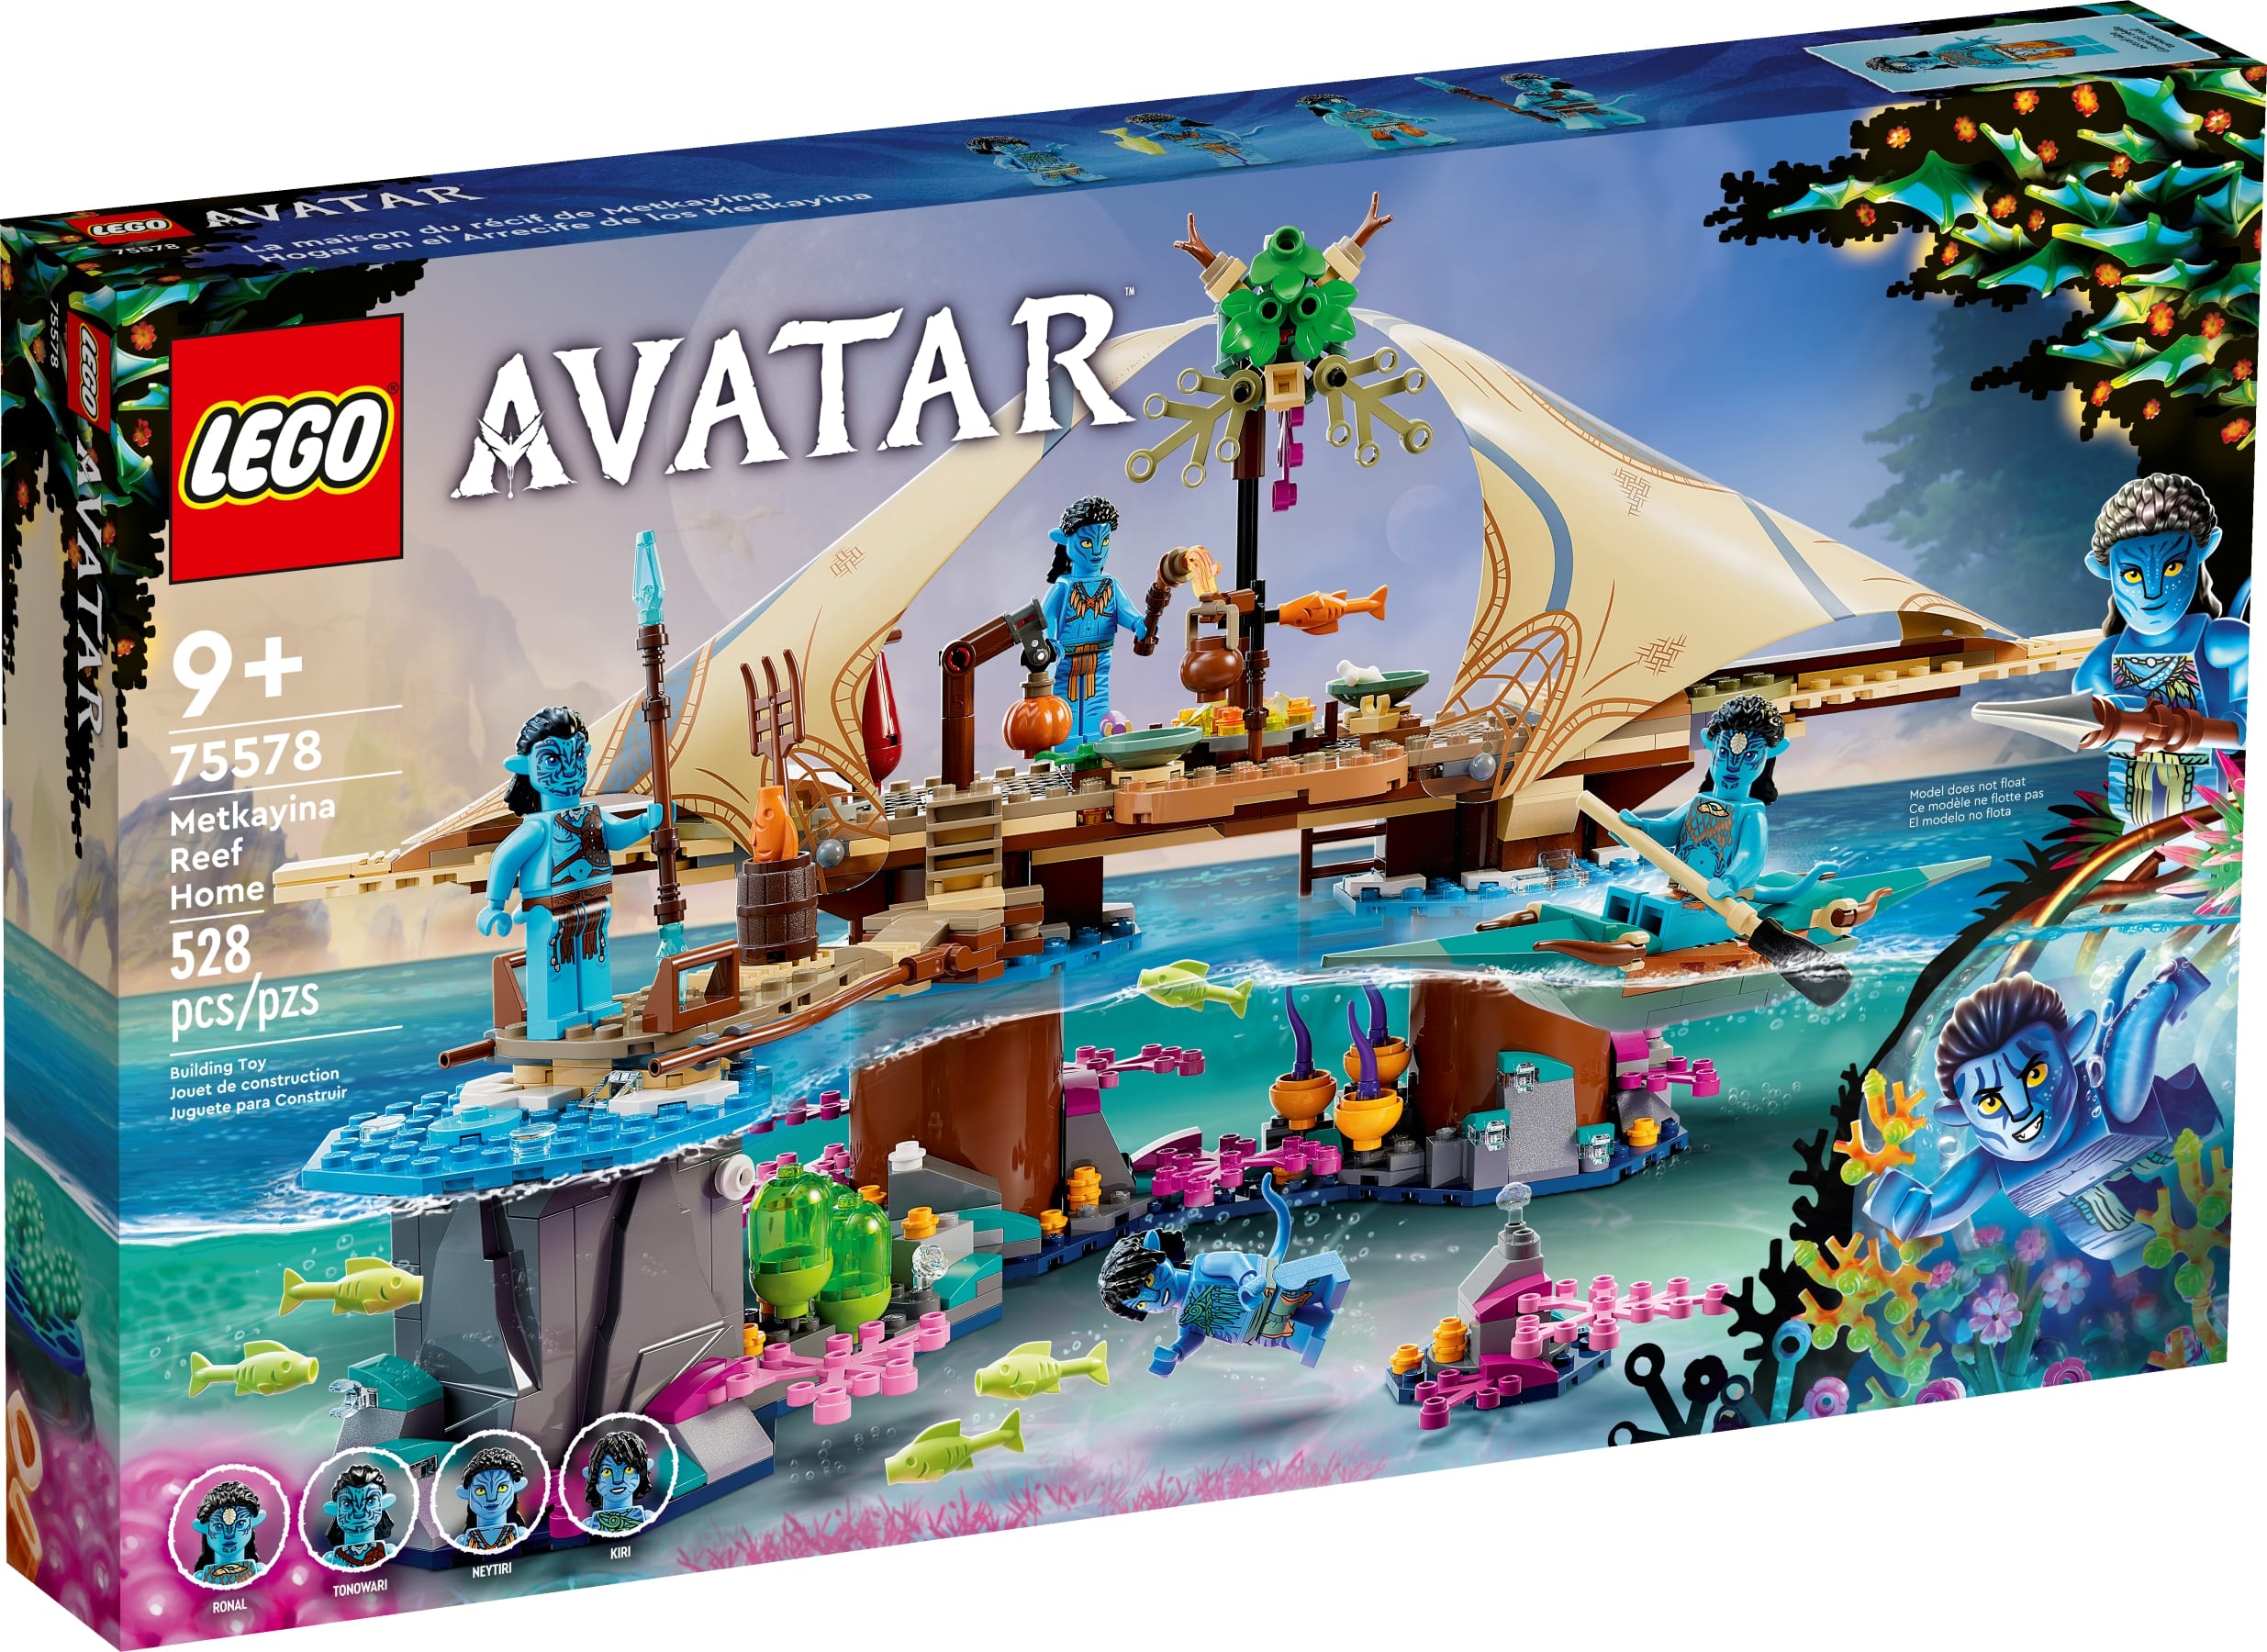 LEGO Avatar Metkayina Reef Home Set 75578 - US